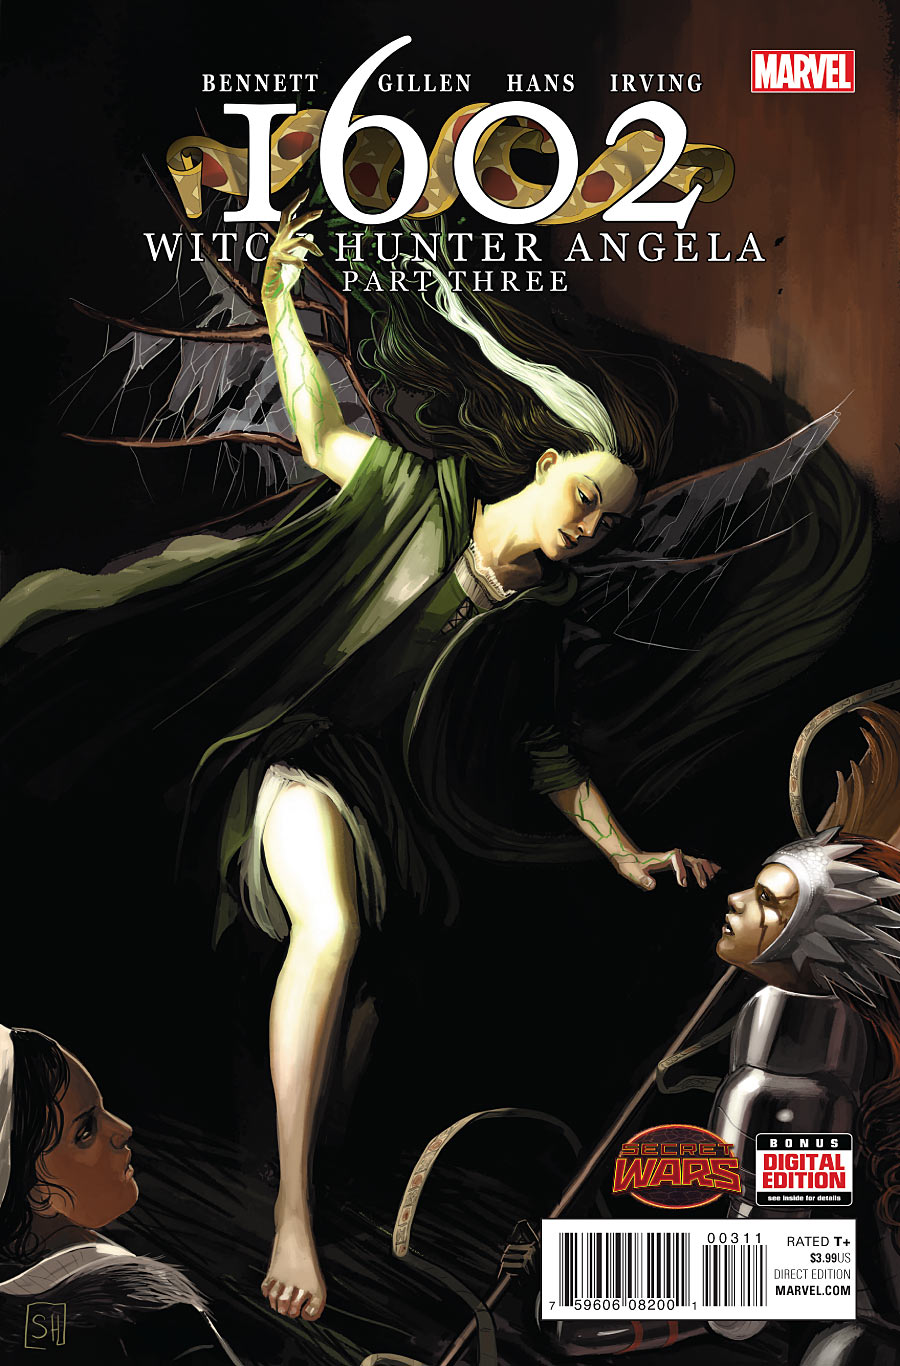 Vol 3 angela 1602 Witch